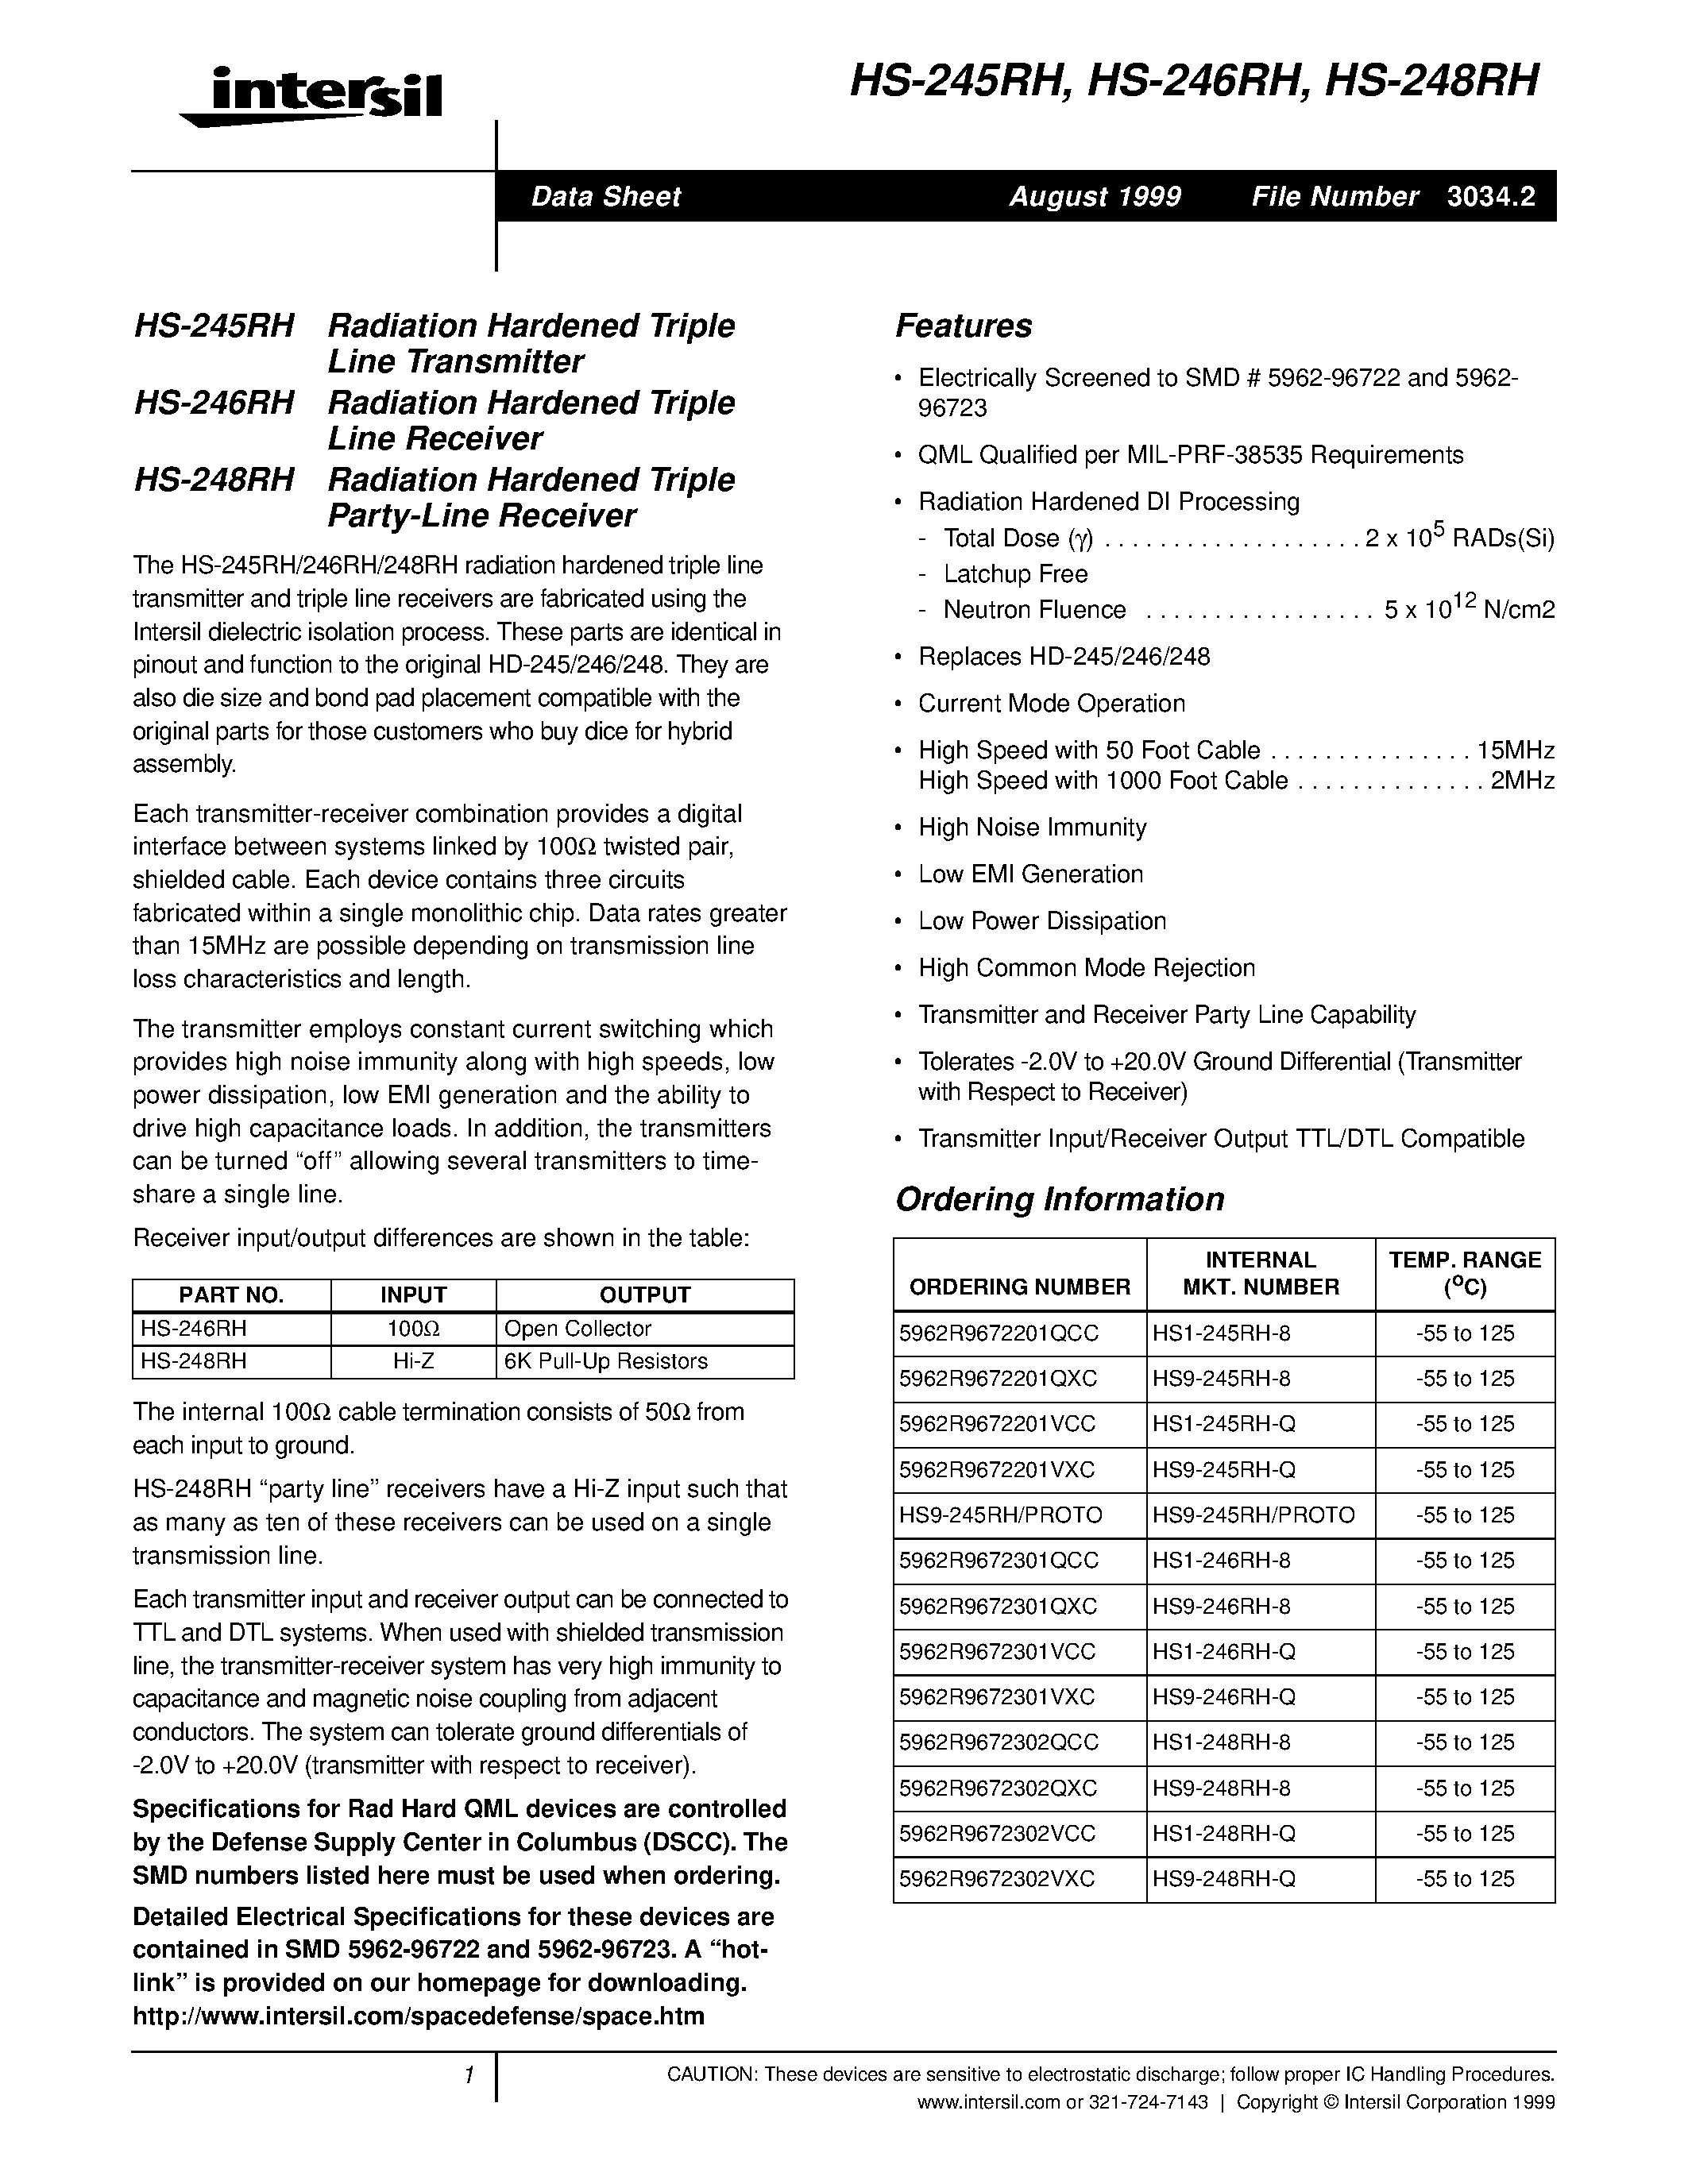 Datasheet HS1-245RH-Q - Radiation Hardened Triple Line(party-Line) Transmitter page 1